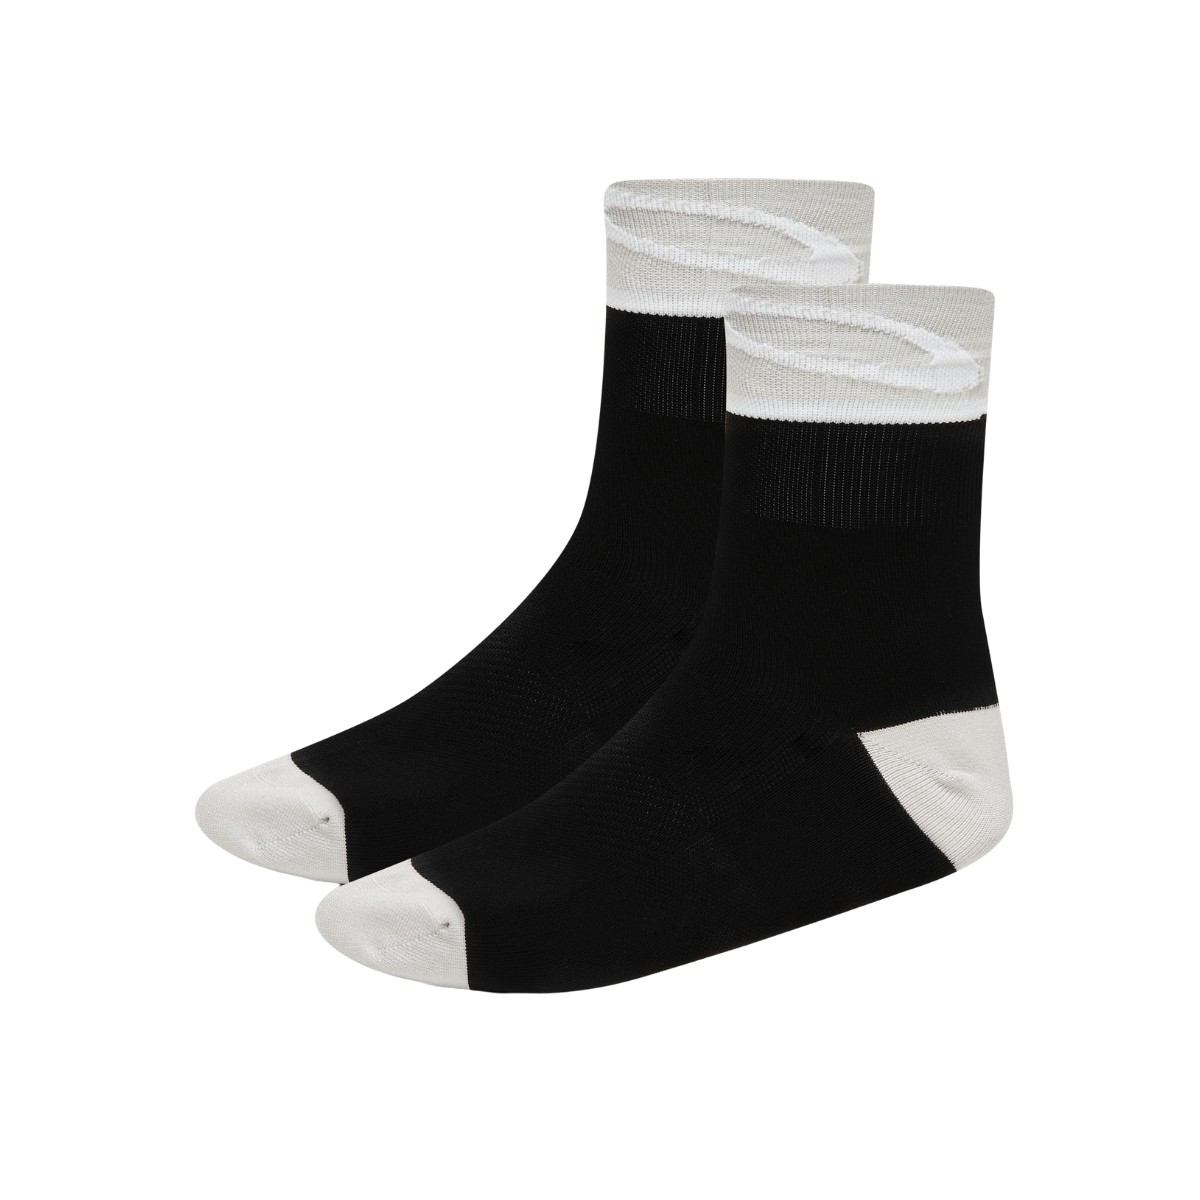 Oakley 3.0 Socks Black White, Size L